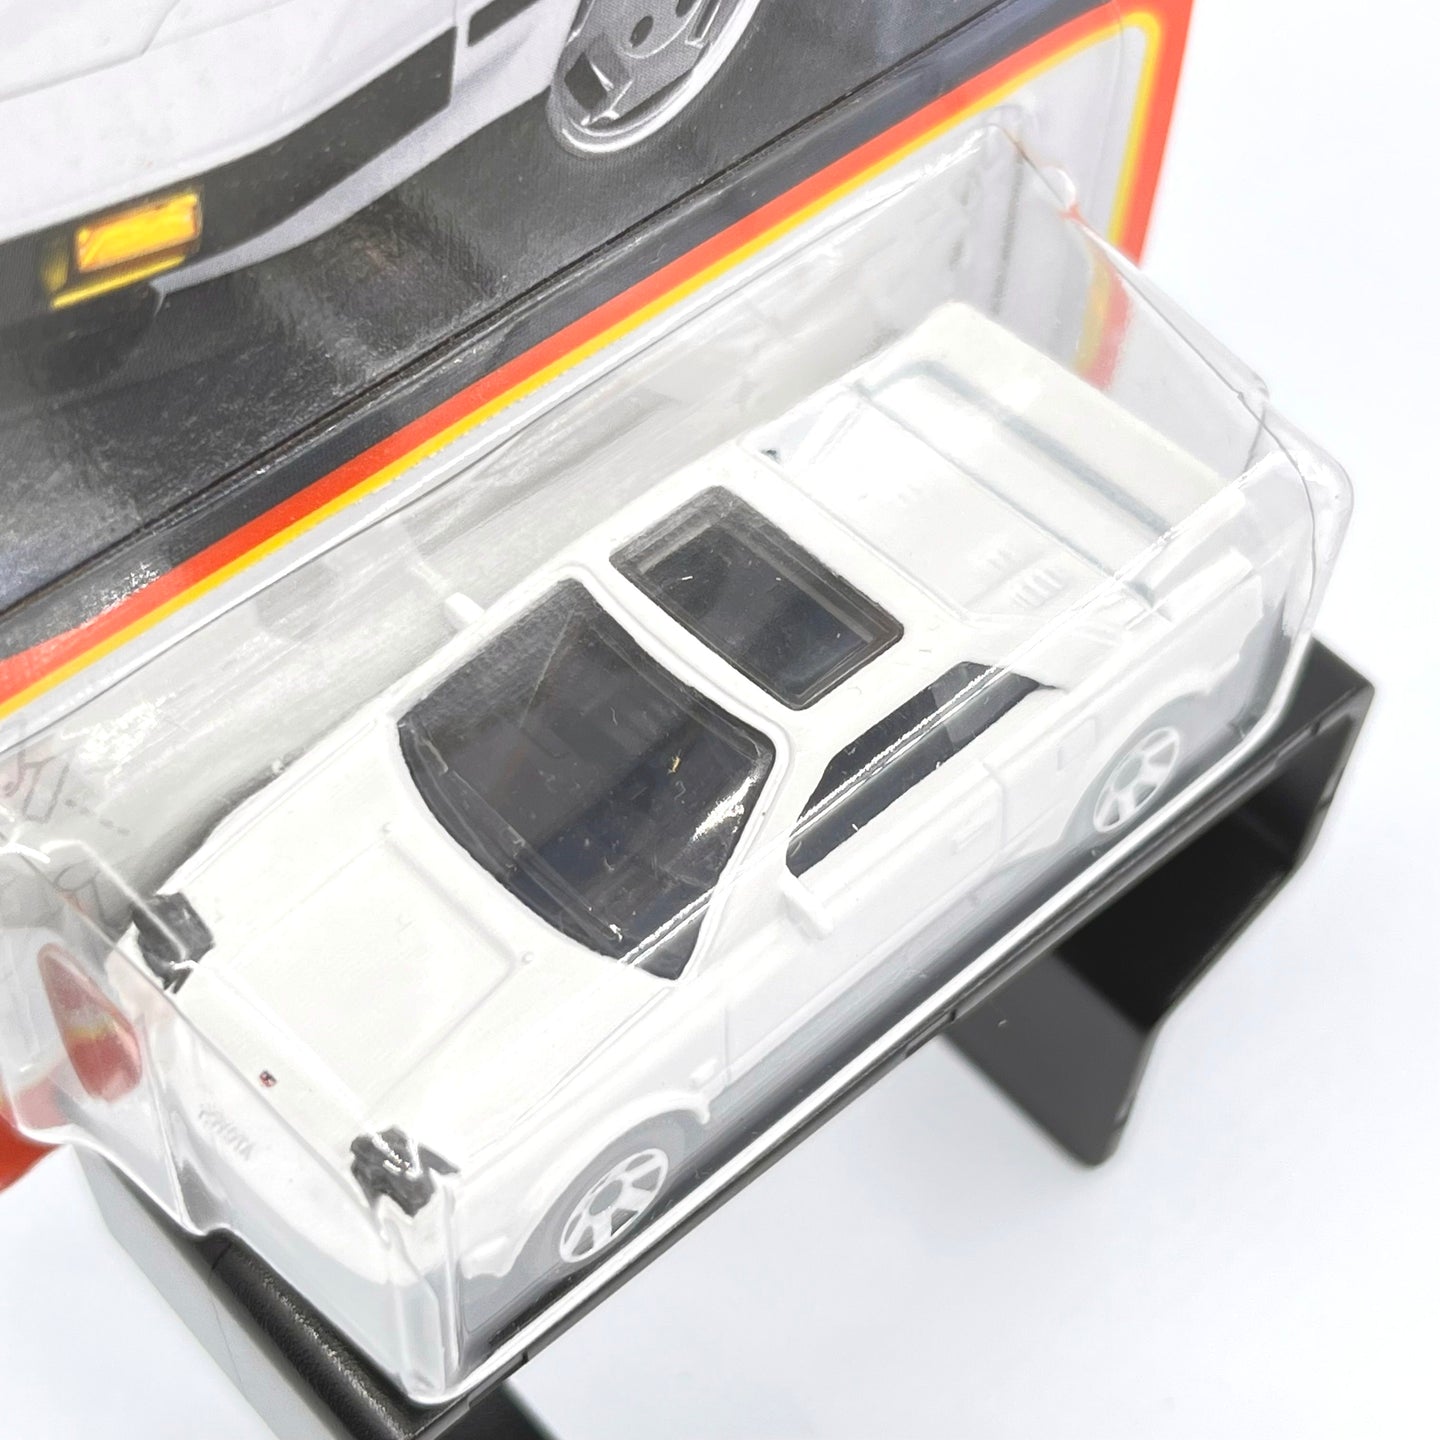 1984 Toyota MR2 Rare MatchBox Alloy Diecast Car Model